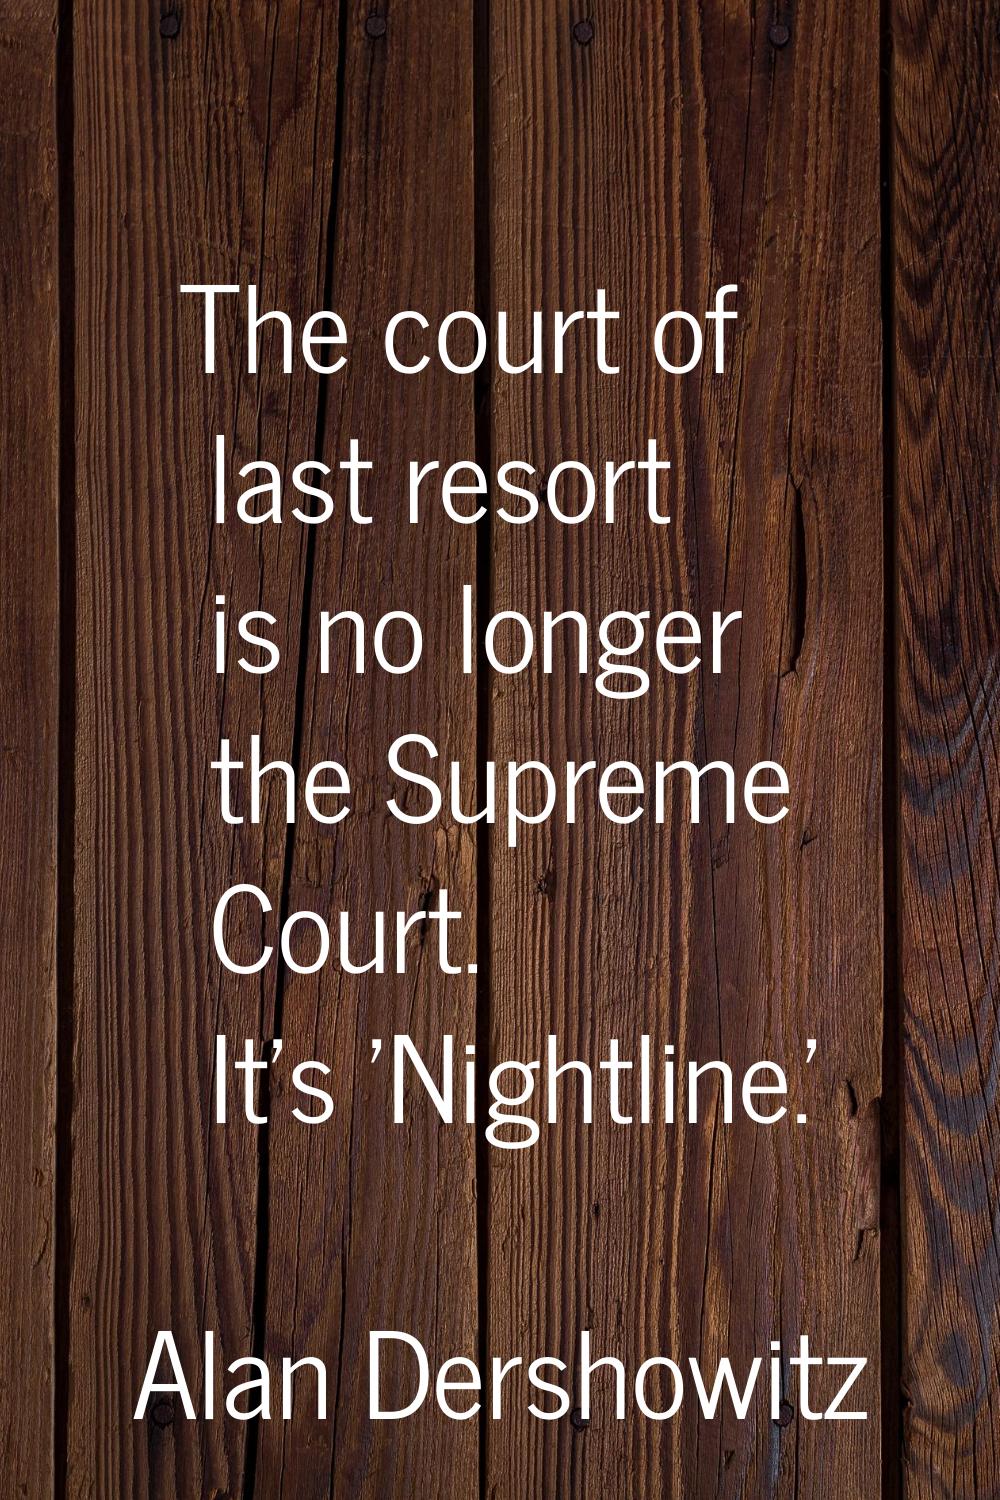 The court of last resort is no longer the Supreme Court. It's 'Nightline.'